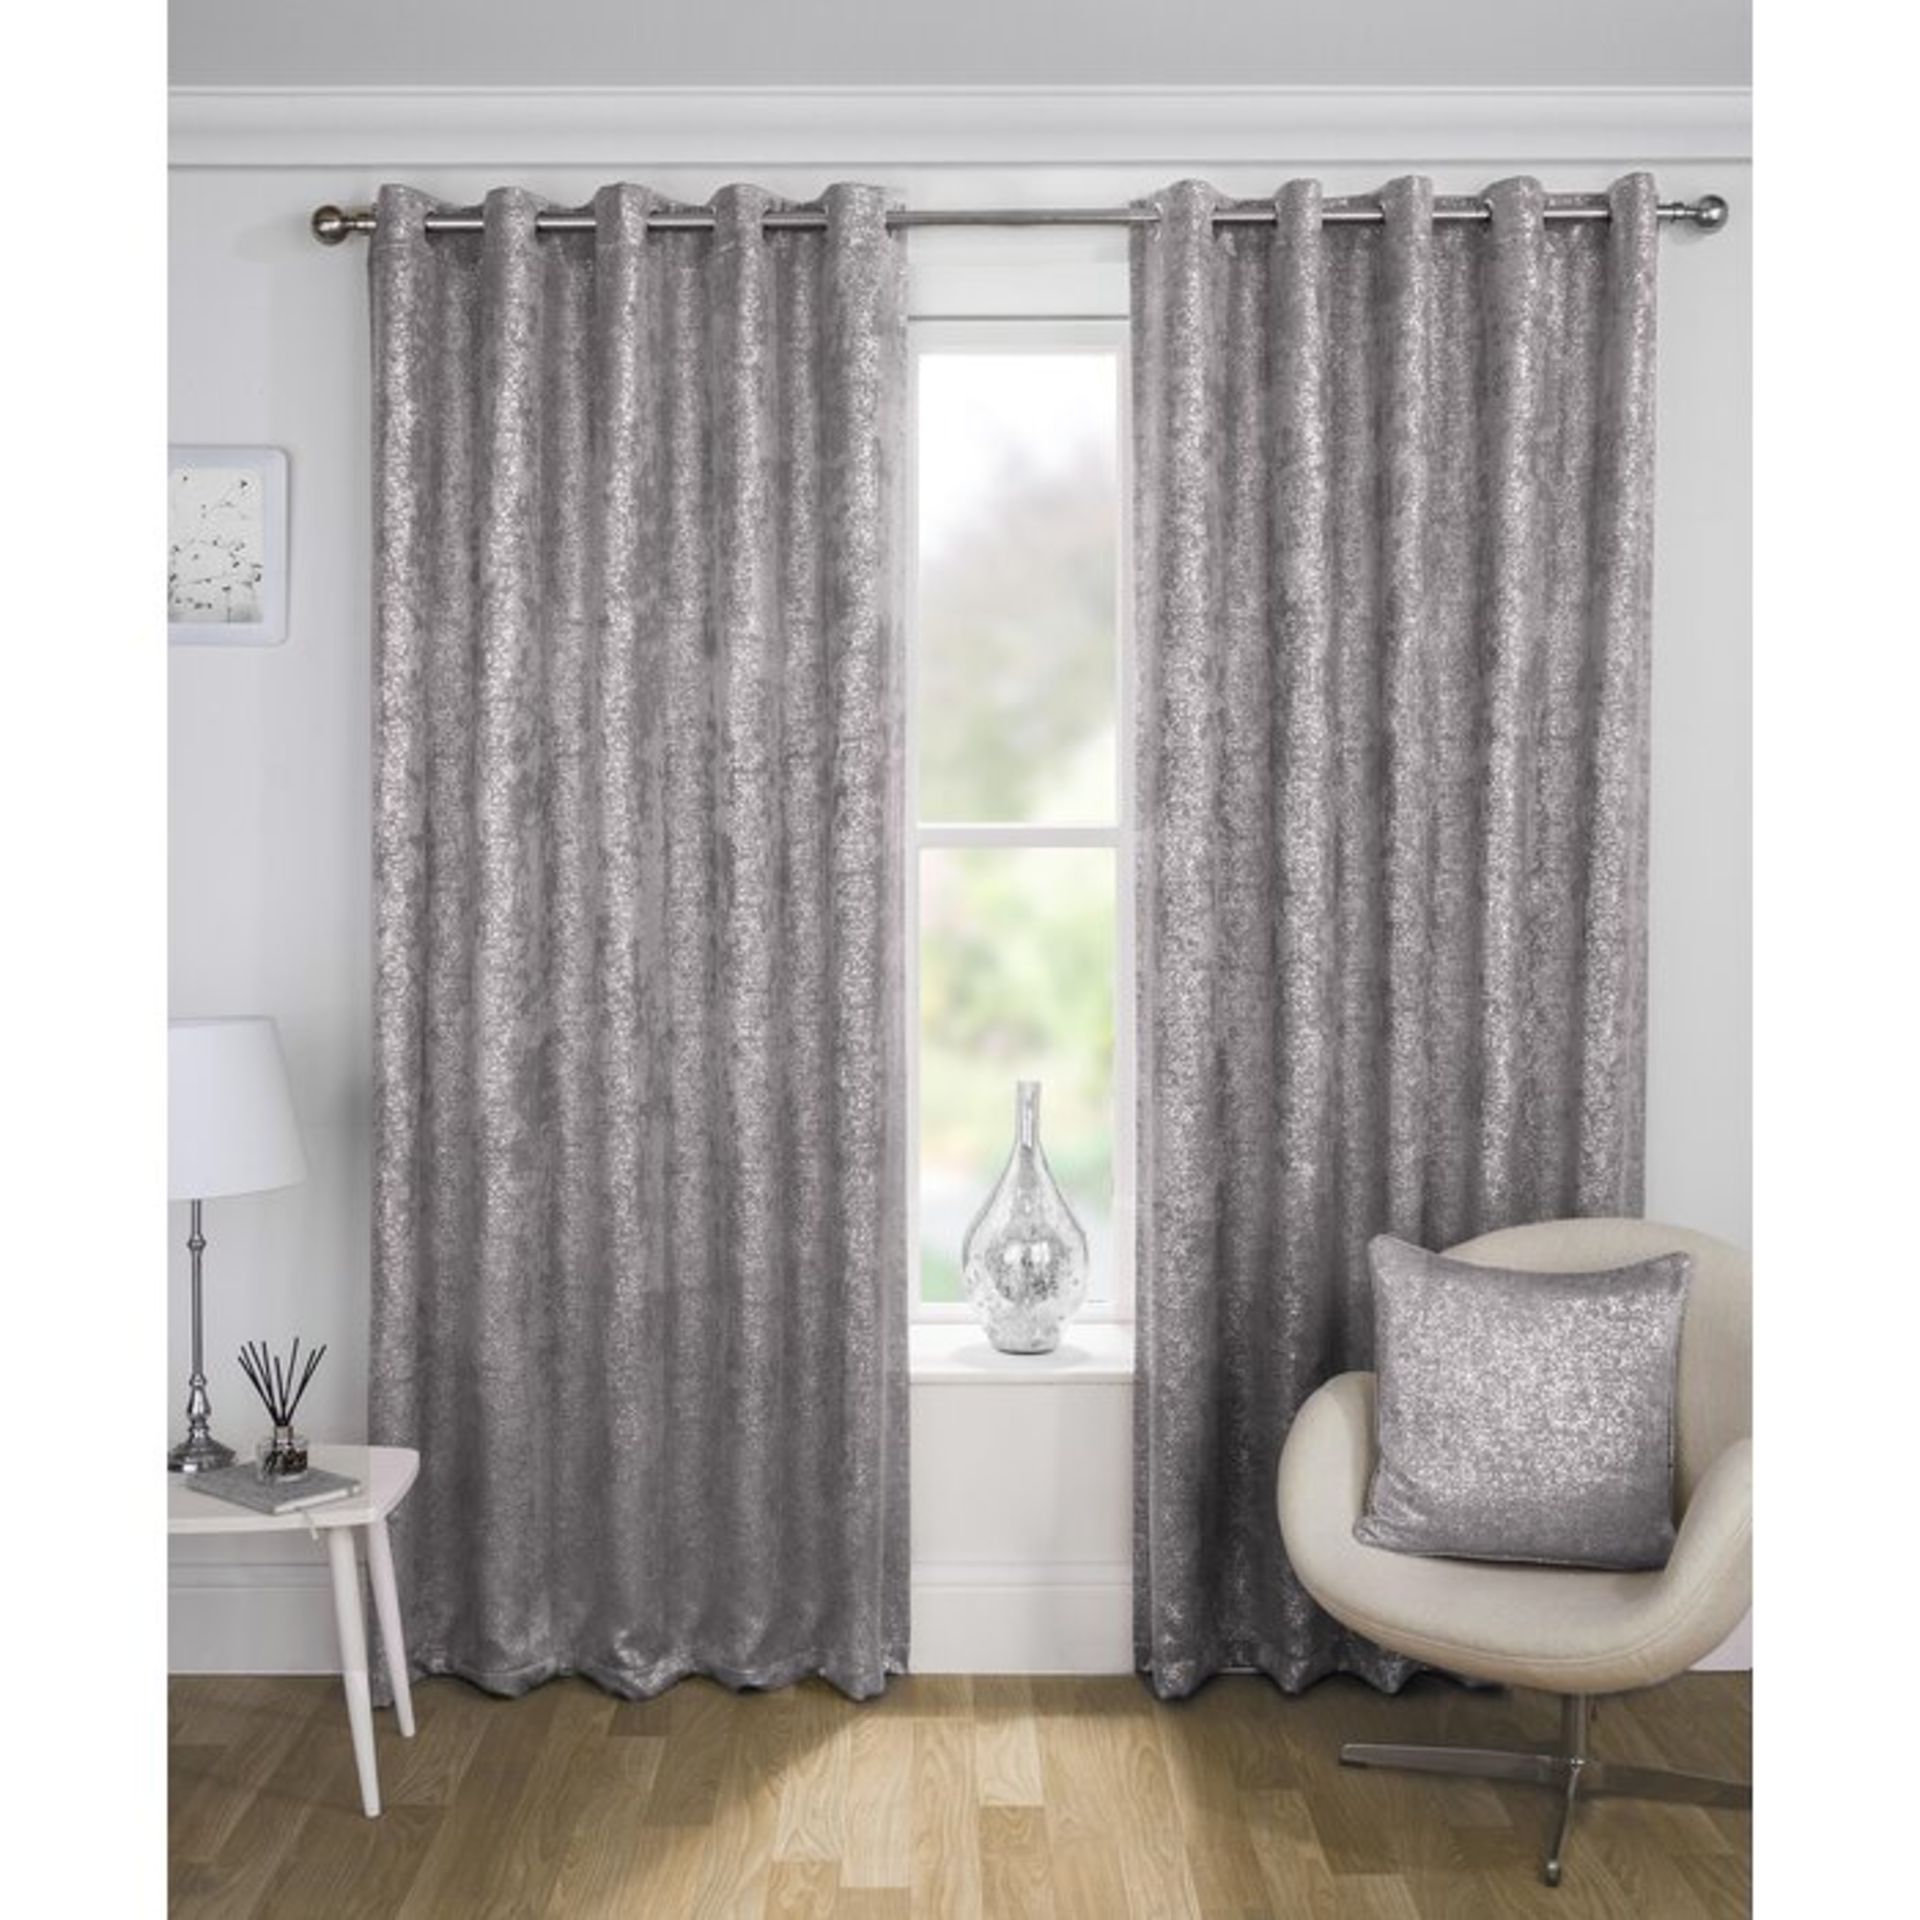 Desiree Eyelet Room Darkening Curtains - RRP £36.00